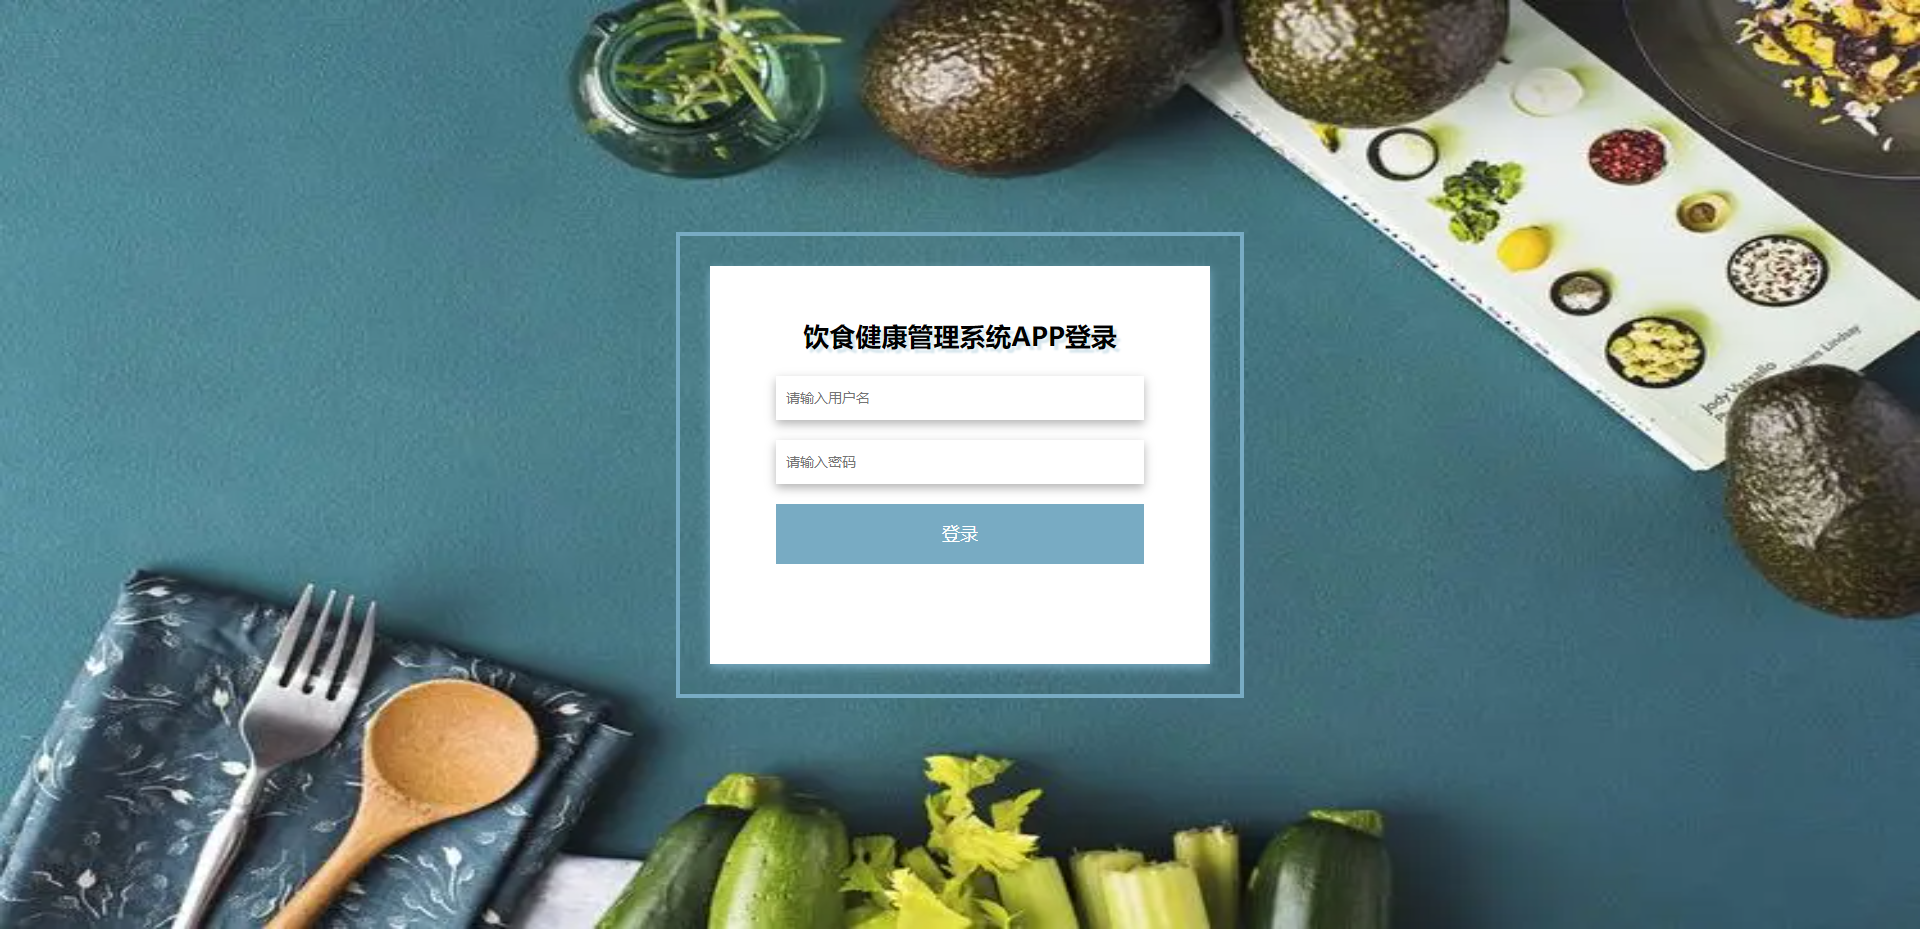 0002Java安卓程序设计-基于Uniapp+springboot菜谱美食饮食健康管理App1